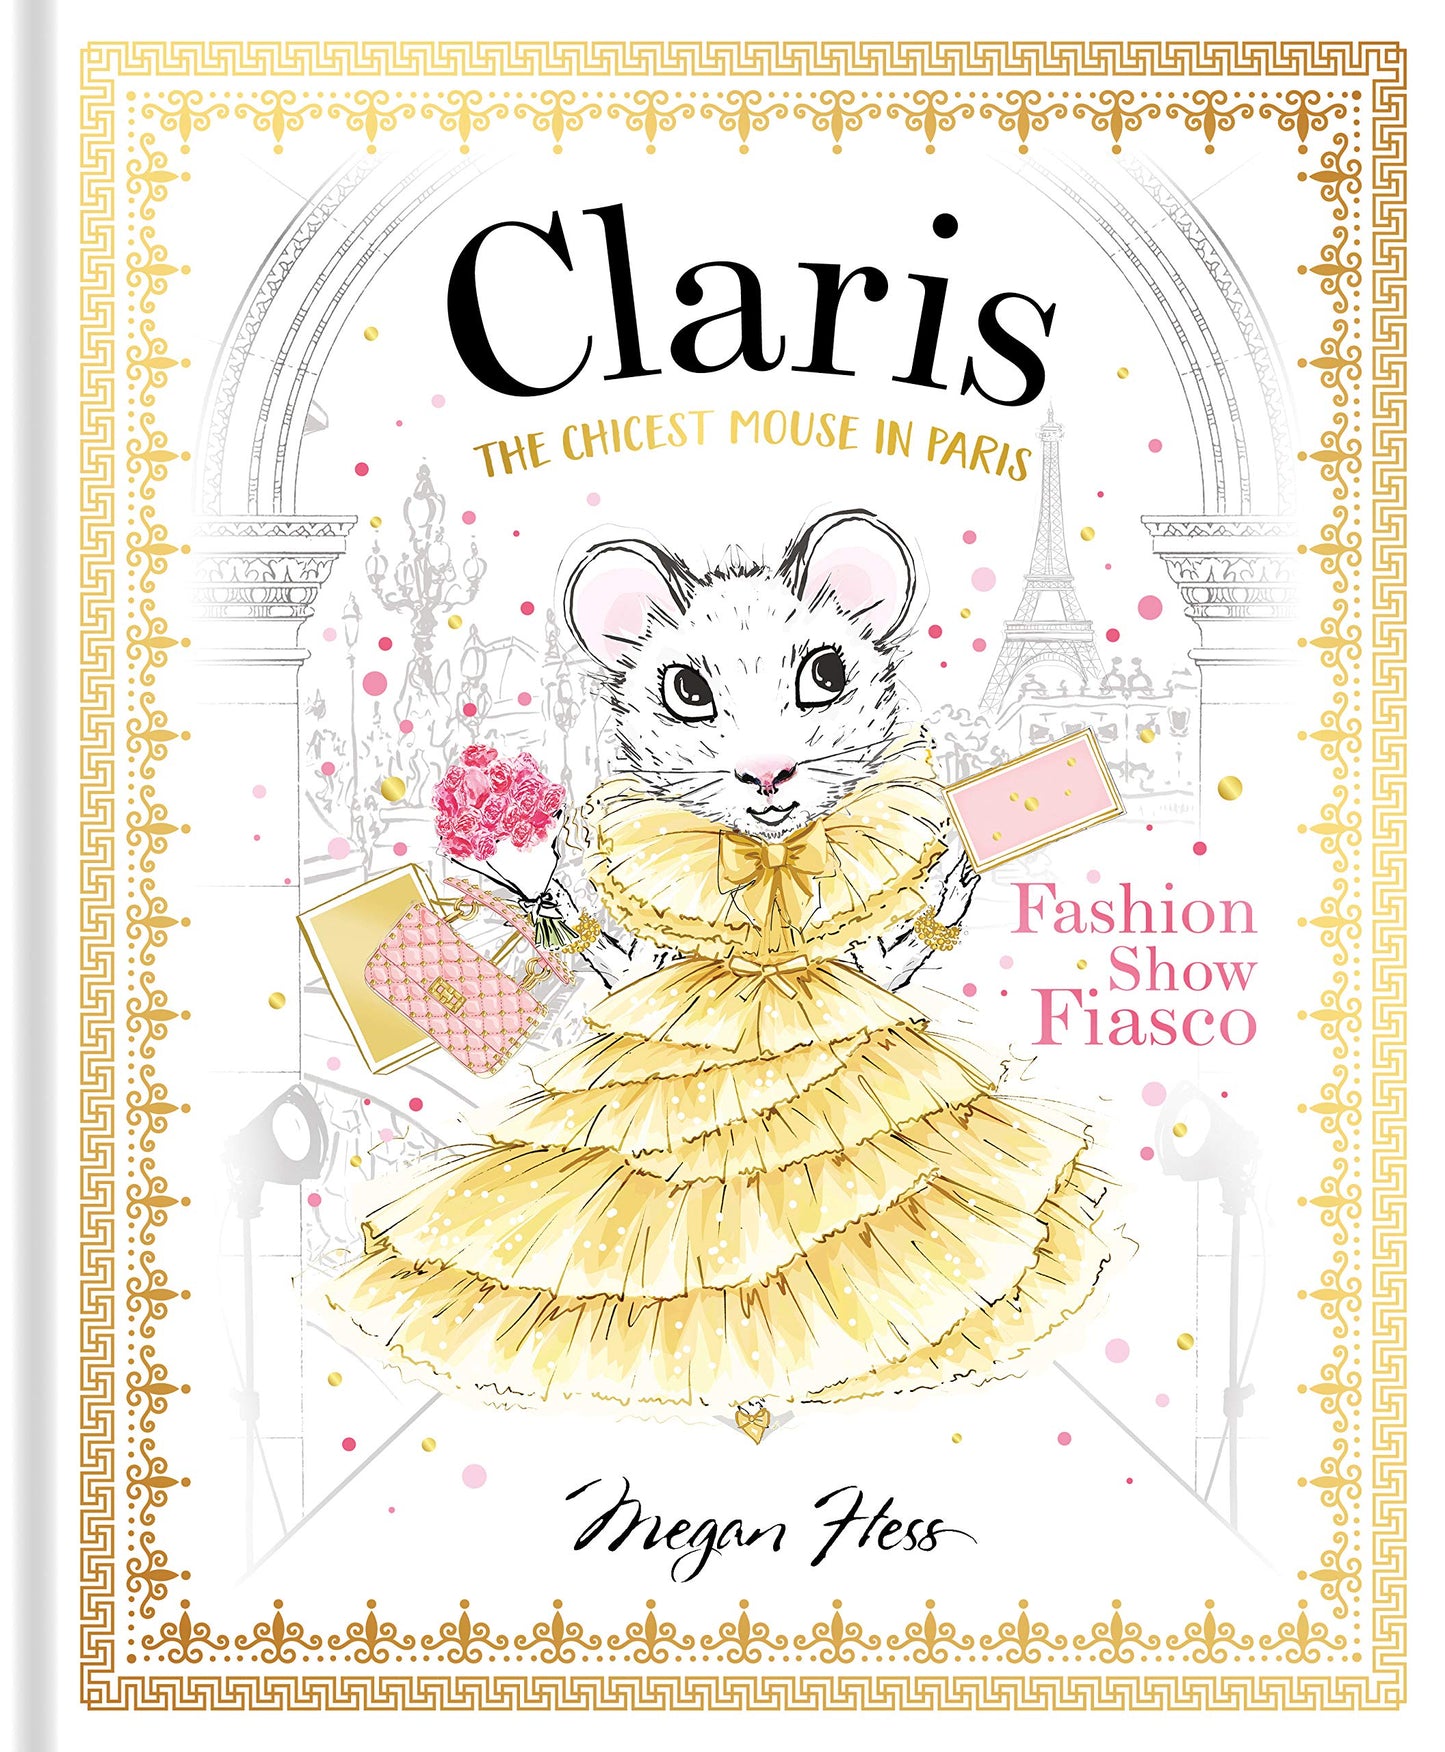 Claris "The Chicest Mouse In Paris, Fashion Show Fiasco"